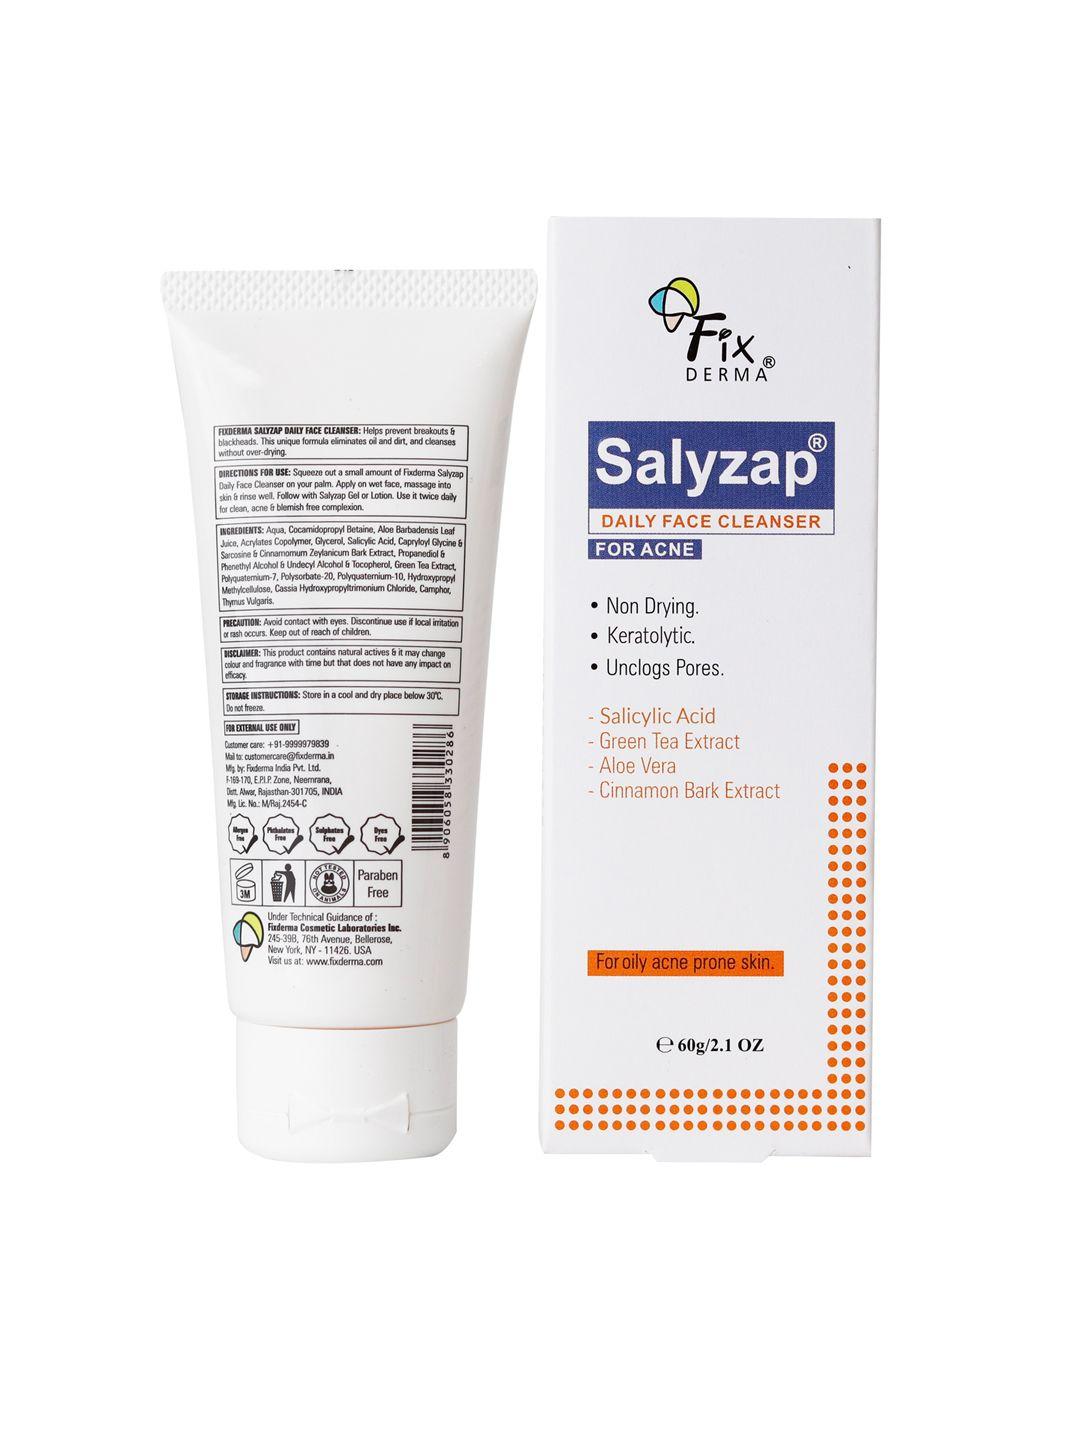 fixderma salyzap 2% salicylic acid daily face cleanser-60g